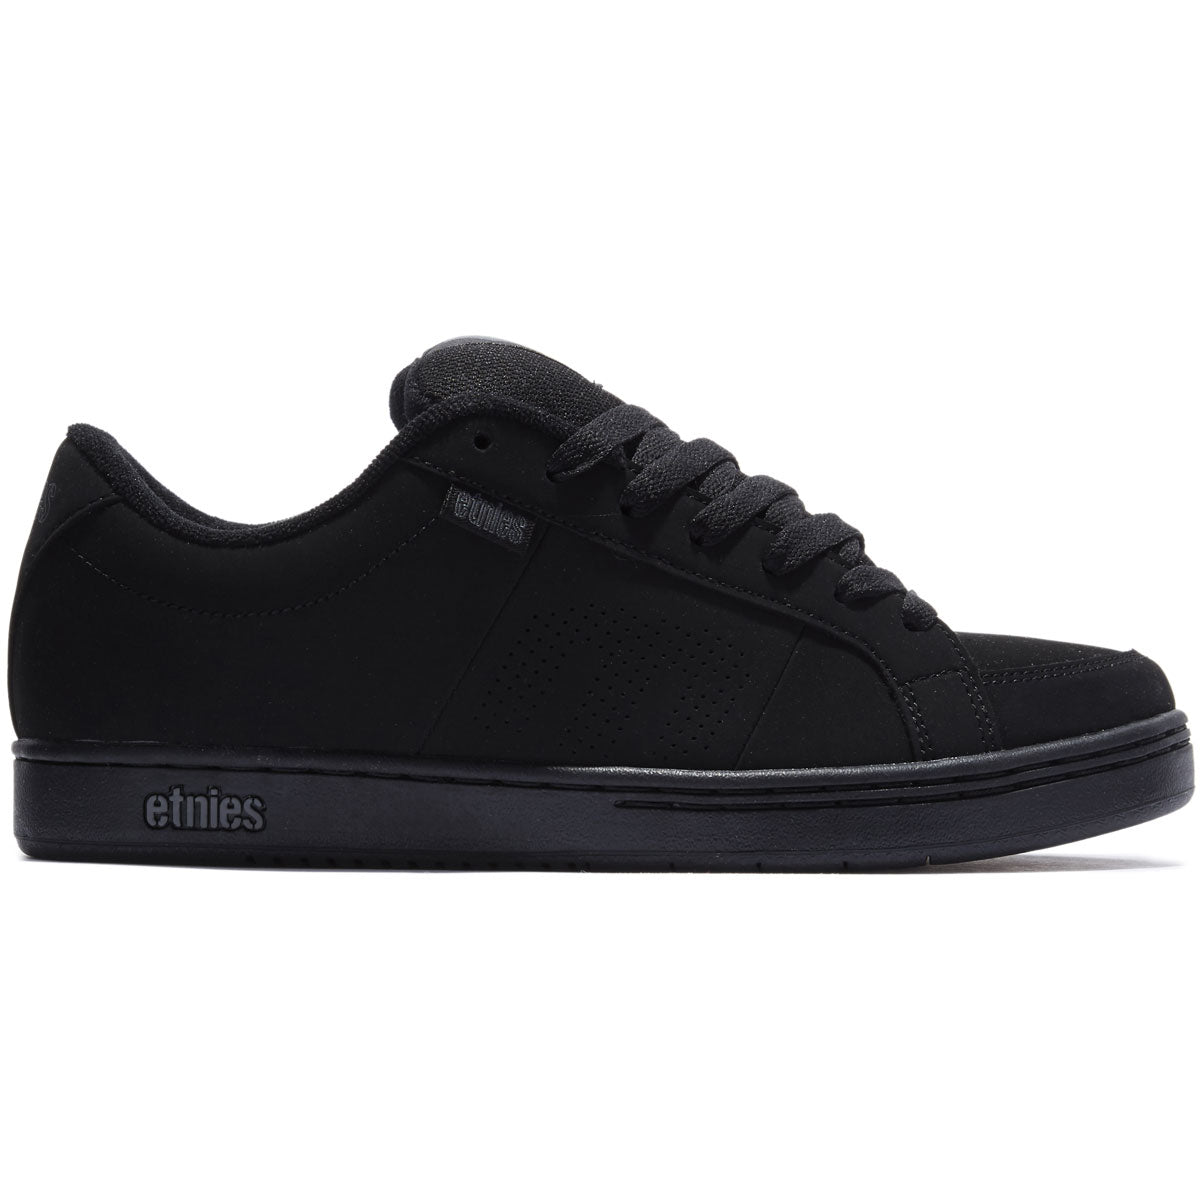 Etnies Kingpin Shoes - Black/Black image 1